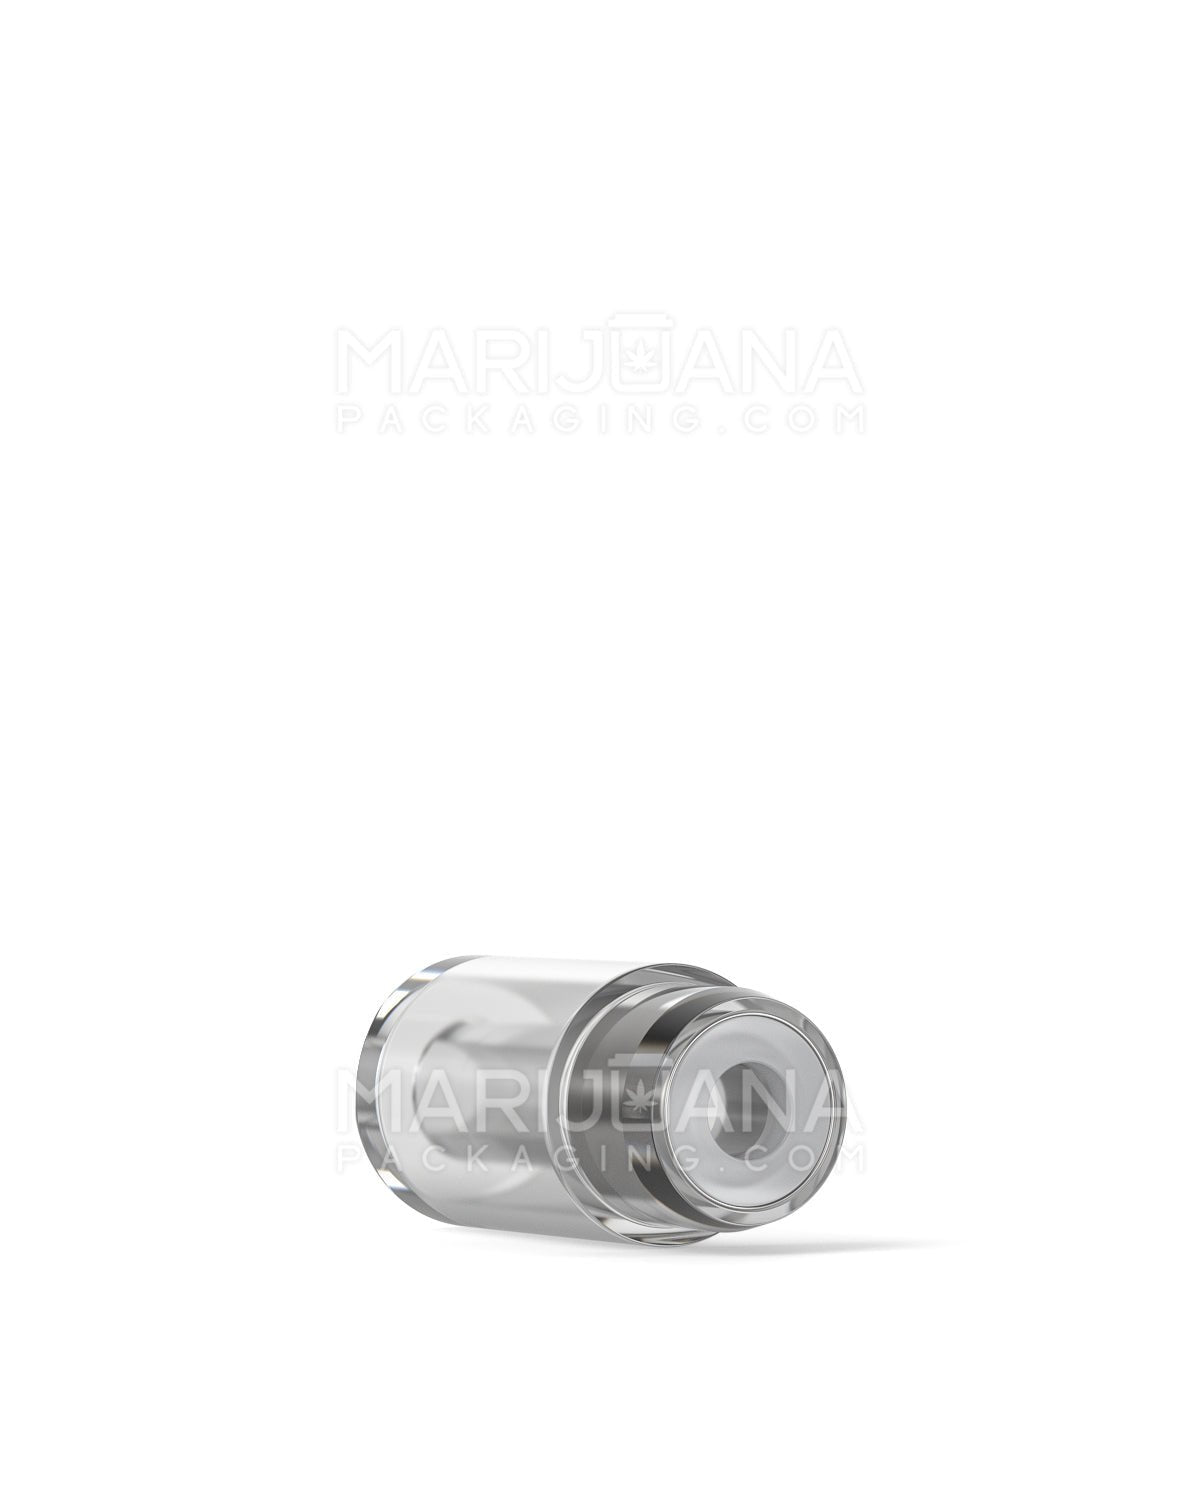 AVD | Barrel Vape Mouthpiece for GoodCarts Plastic Cartridges | Clear Plastic - Eazy Press - 600 Count - 6